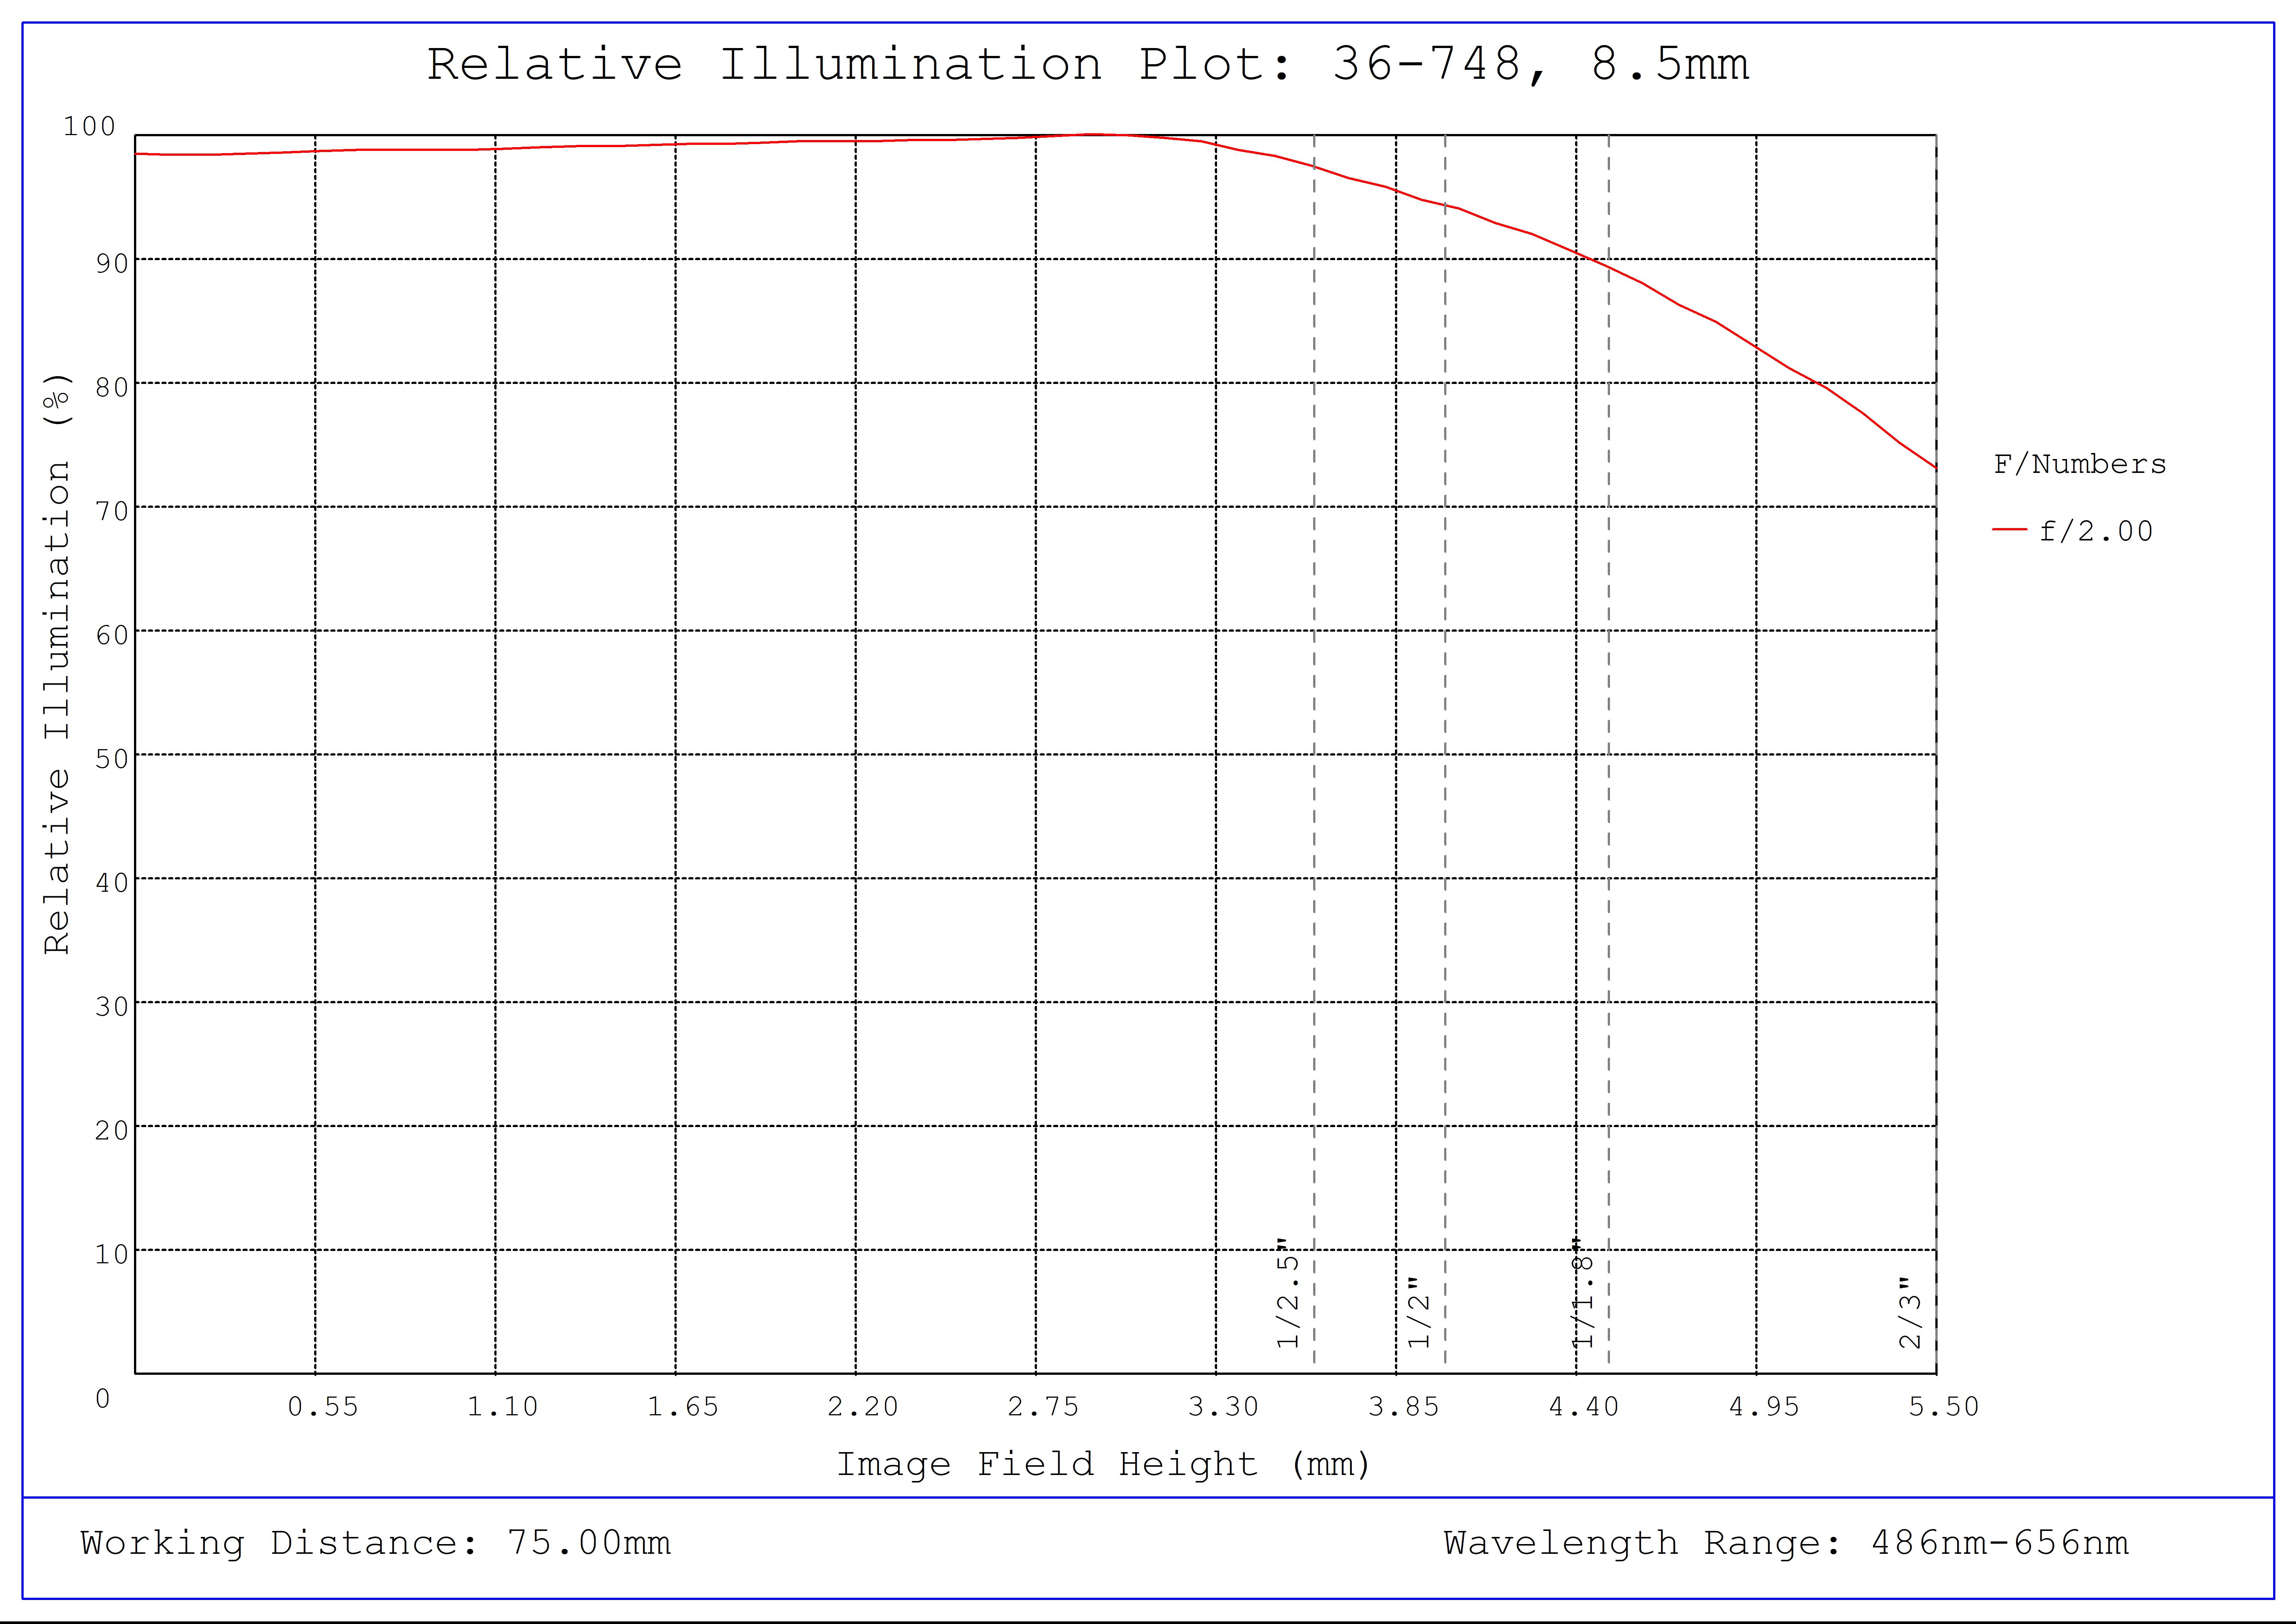 #36-748, 8.5mm f/2, 75mm-∞ Primary WD, HRi Series Fixed Focal Length Lens, Relative Illumination Plot